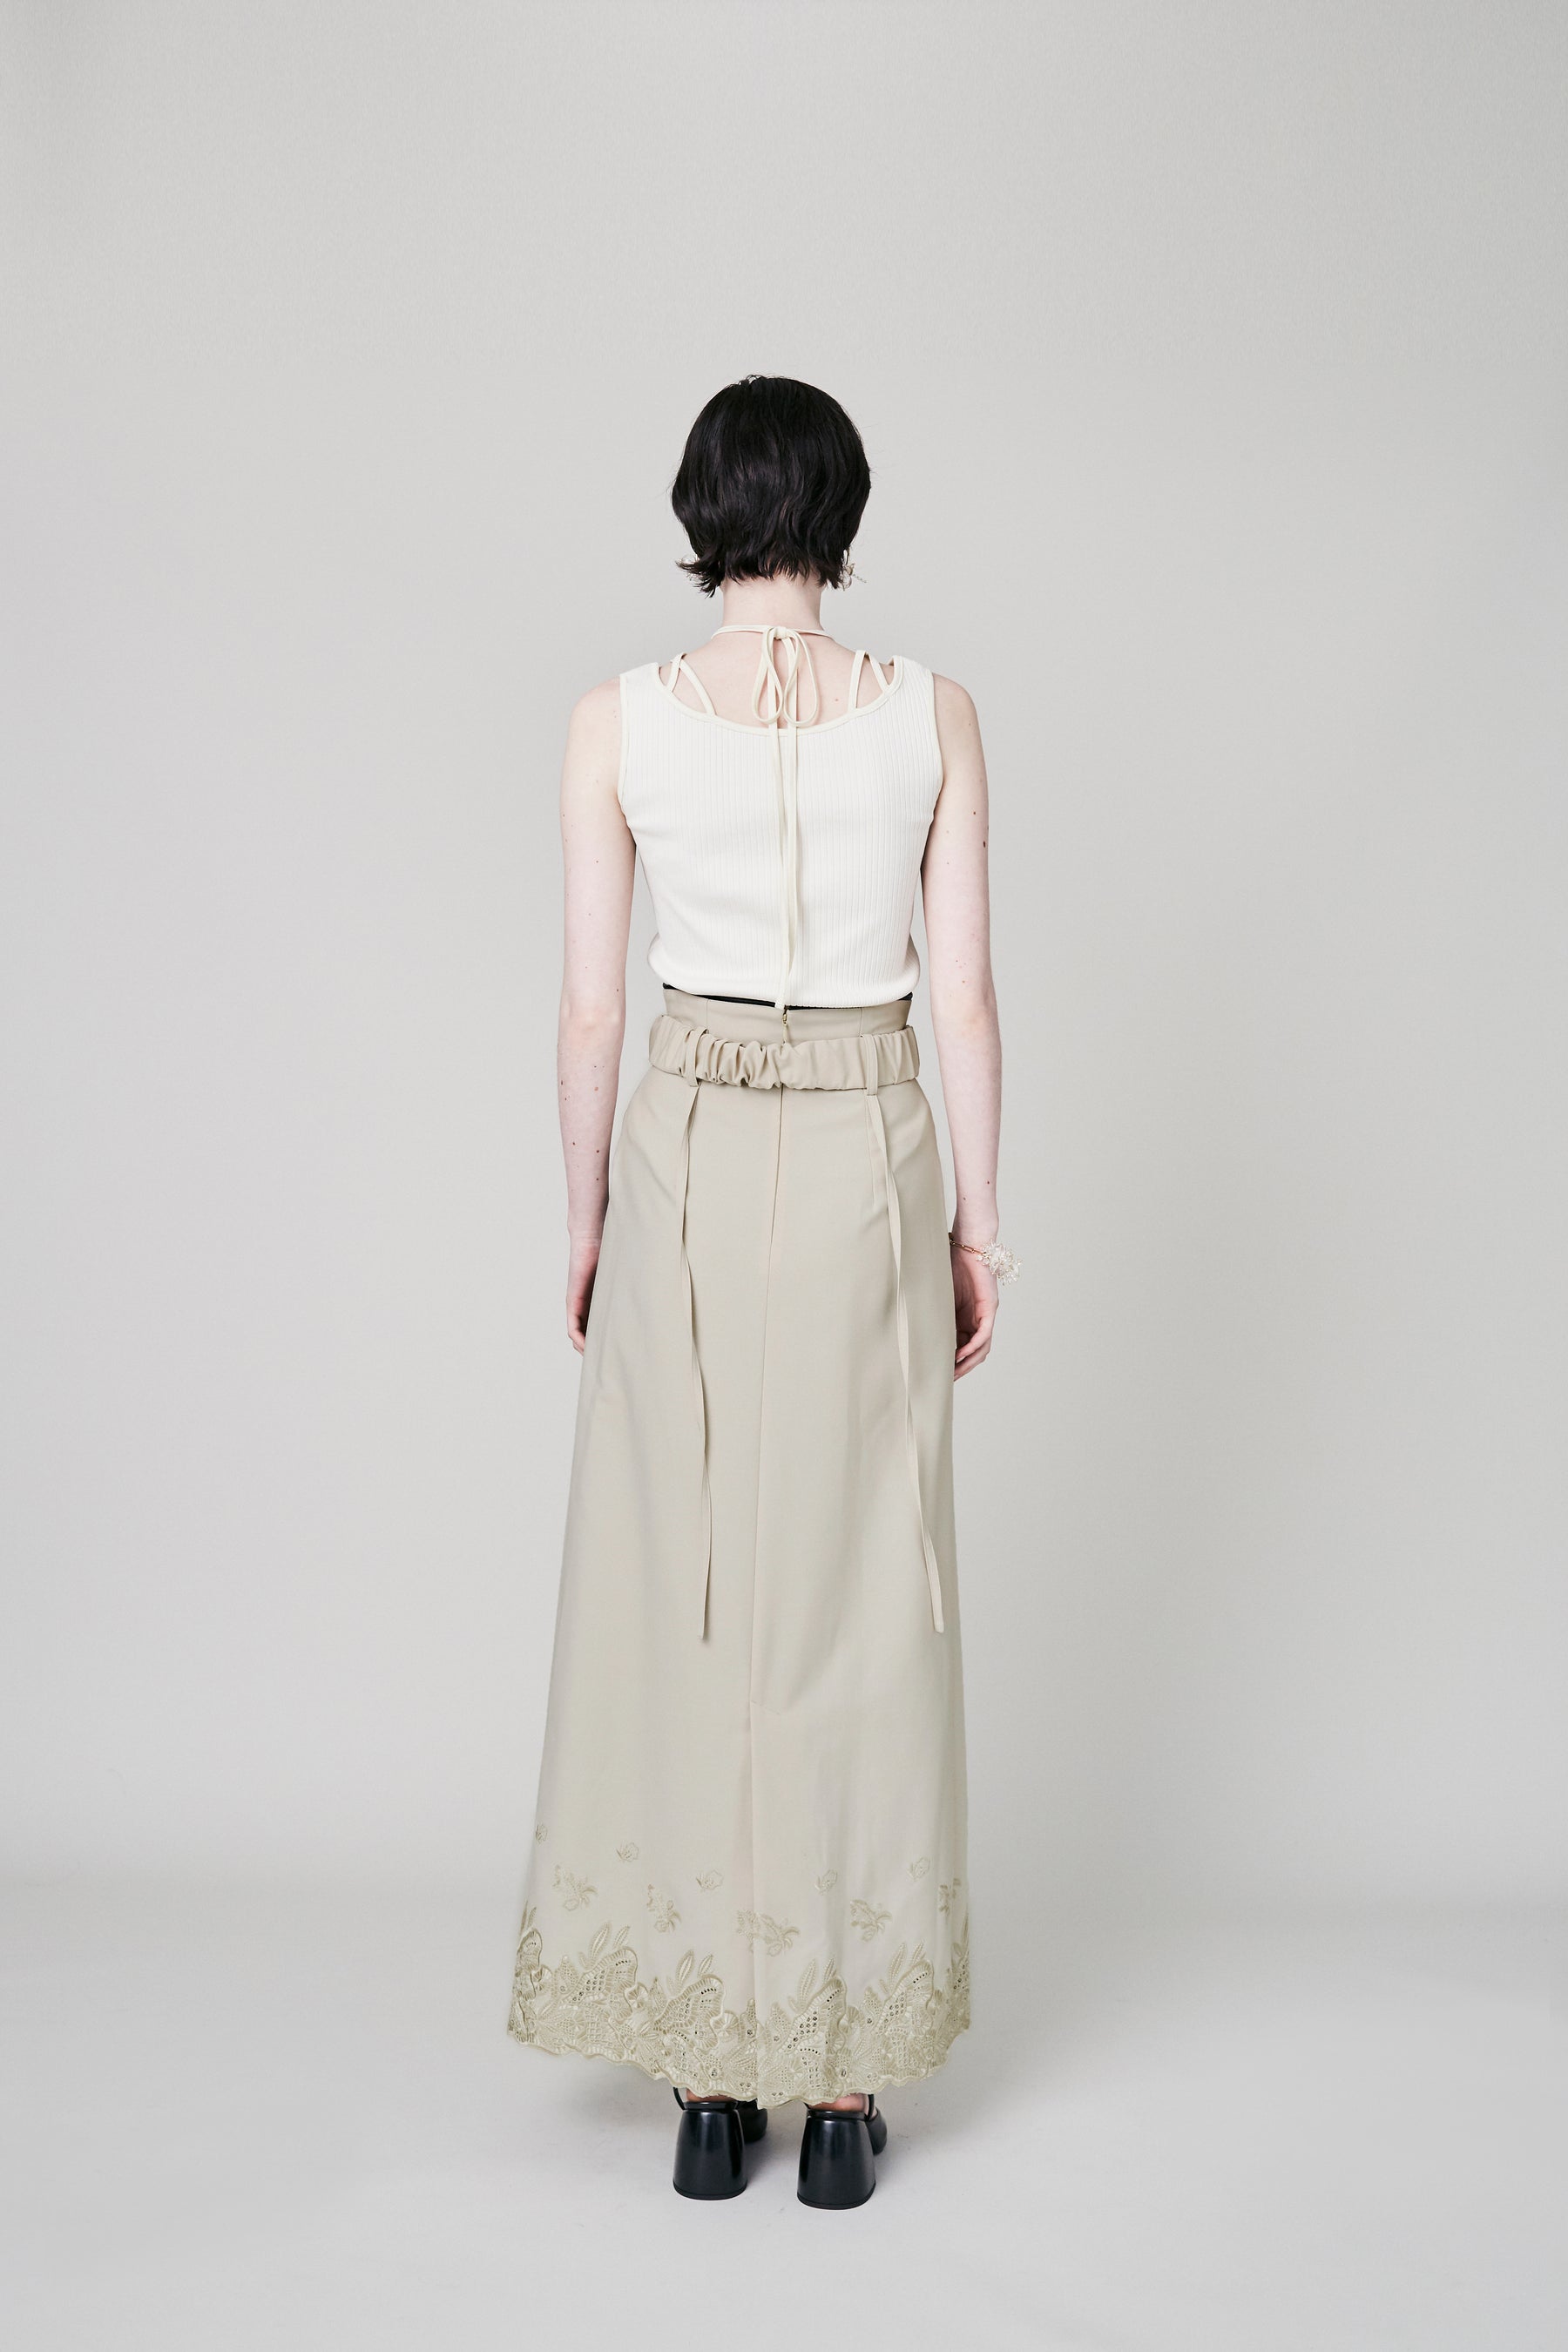 Morpho embroidery skirt (Ivory)